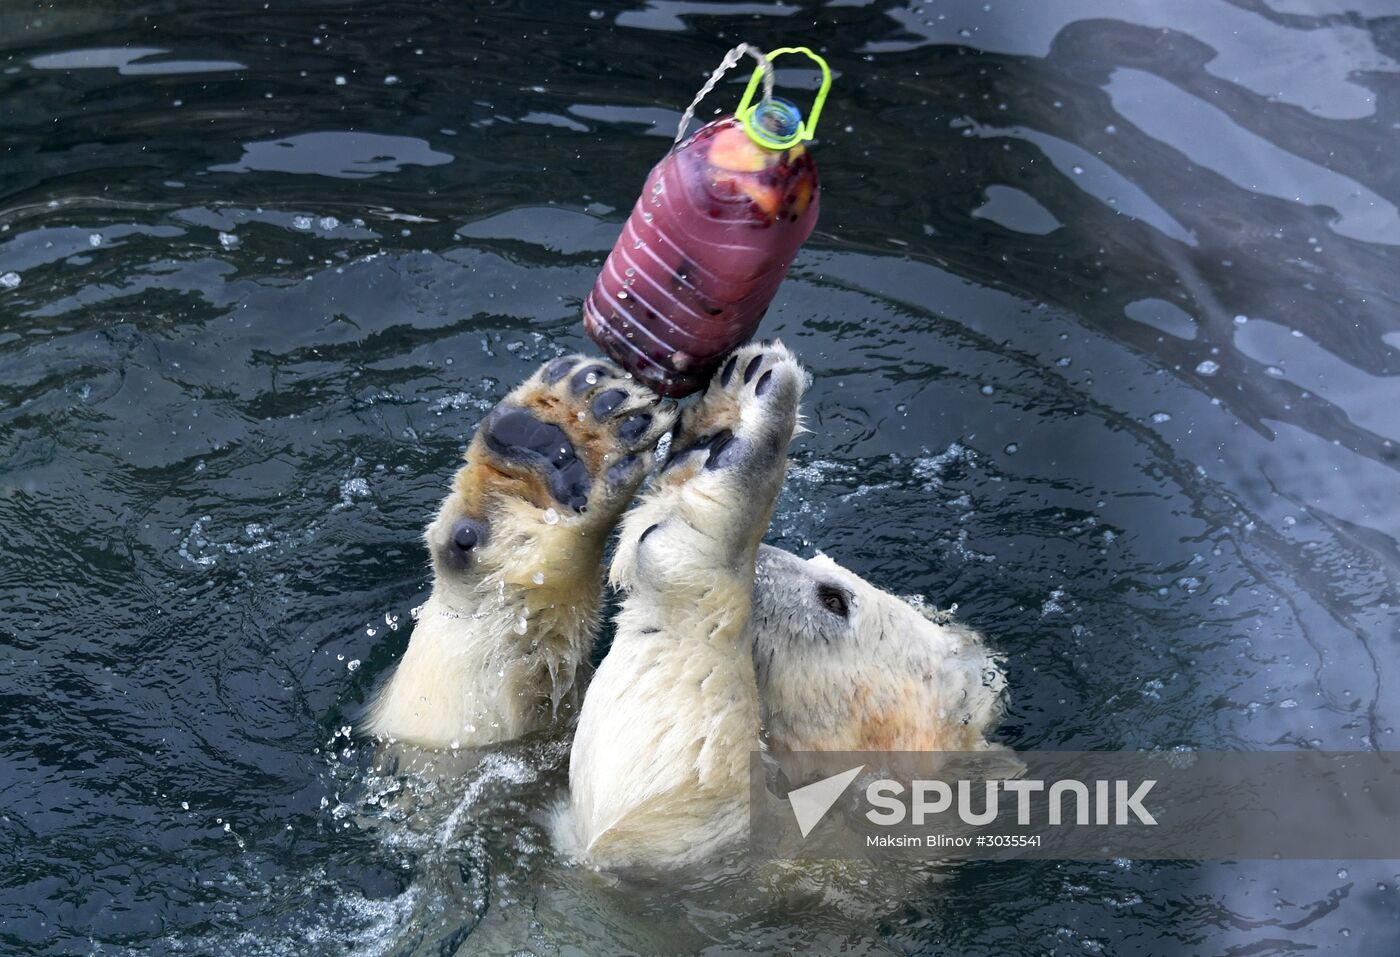 Polar bears in Moscow Zoo